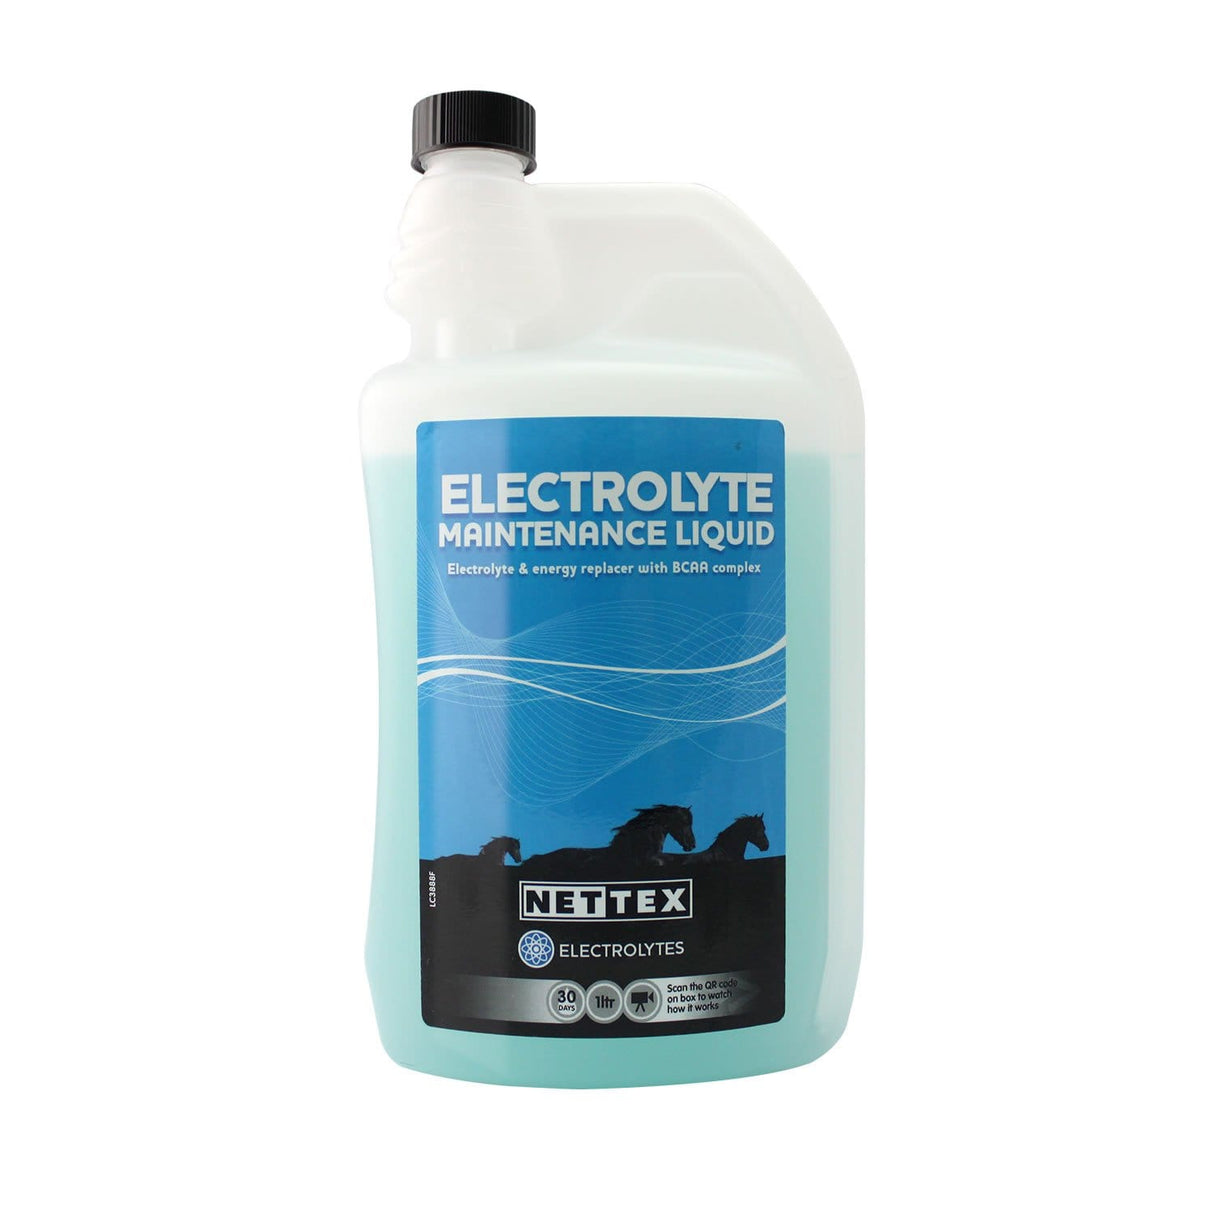 Nettex Electrolyte Maintenance Liquid